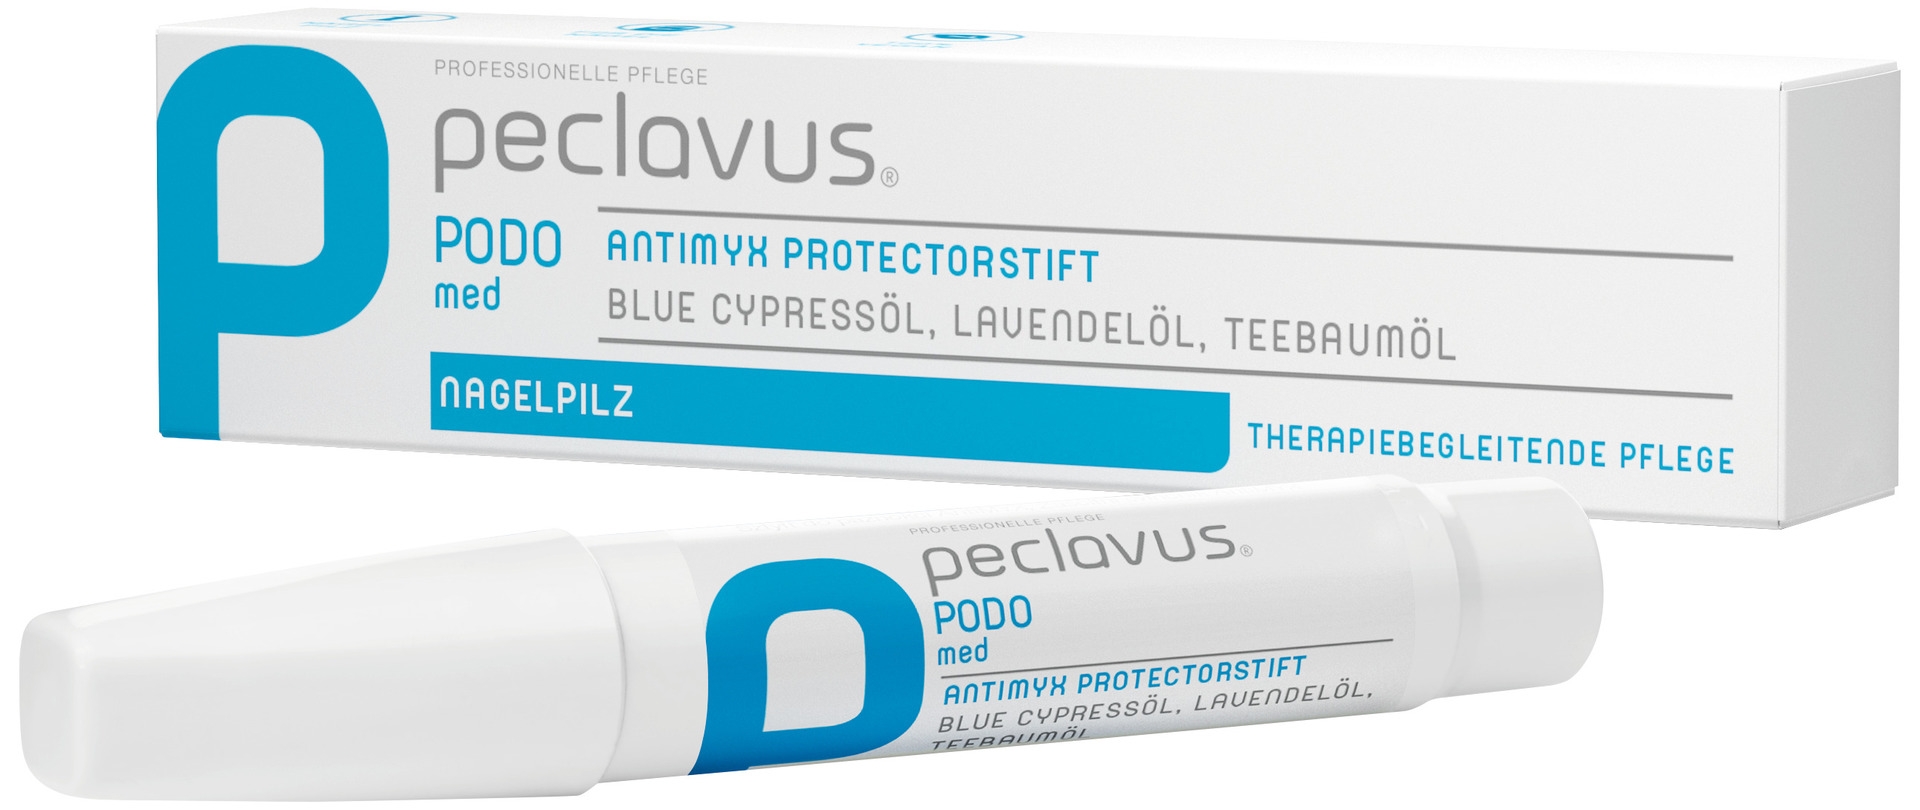 Peclavus PODOmed AntiMYX Protectorstift | 4 ml